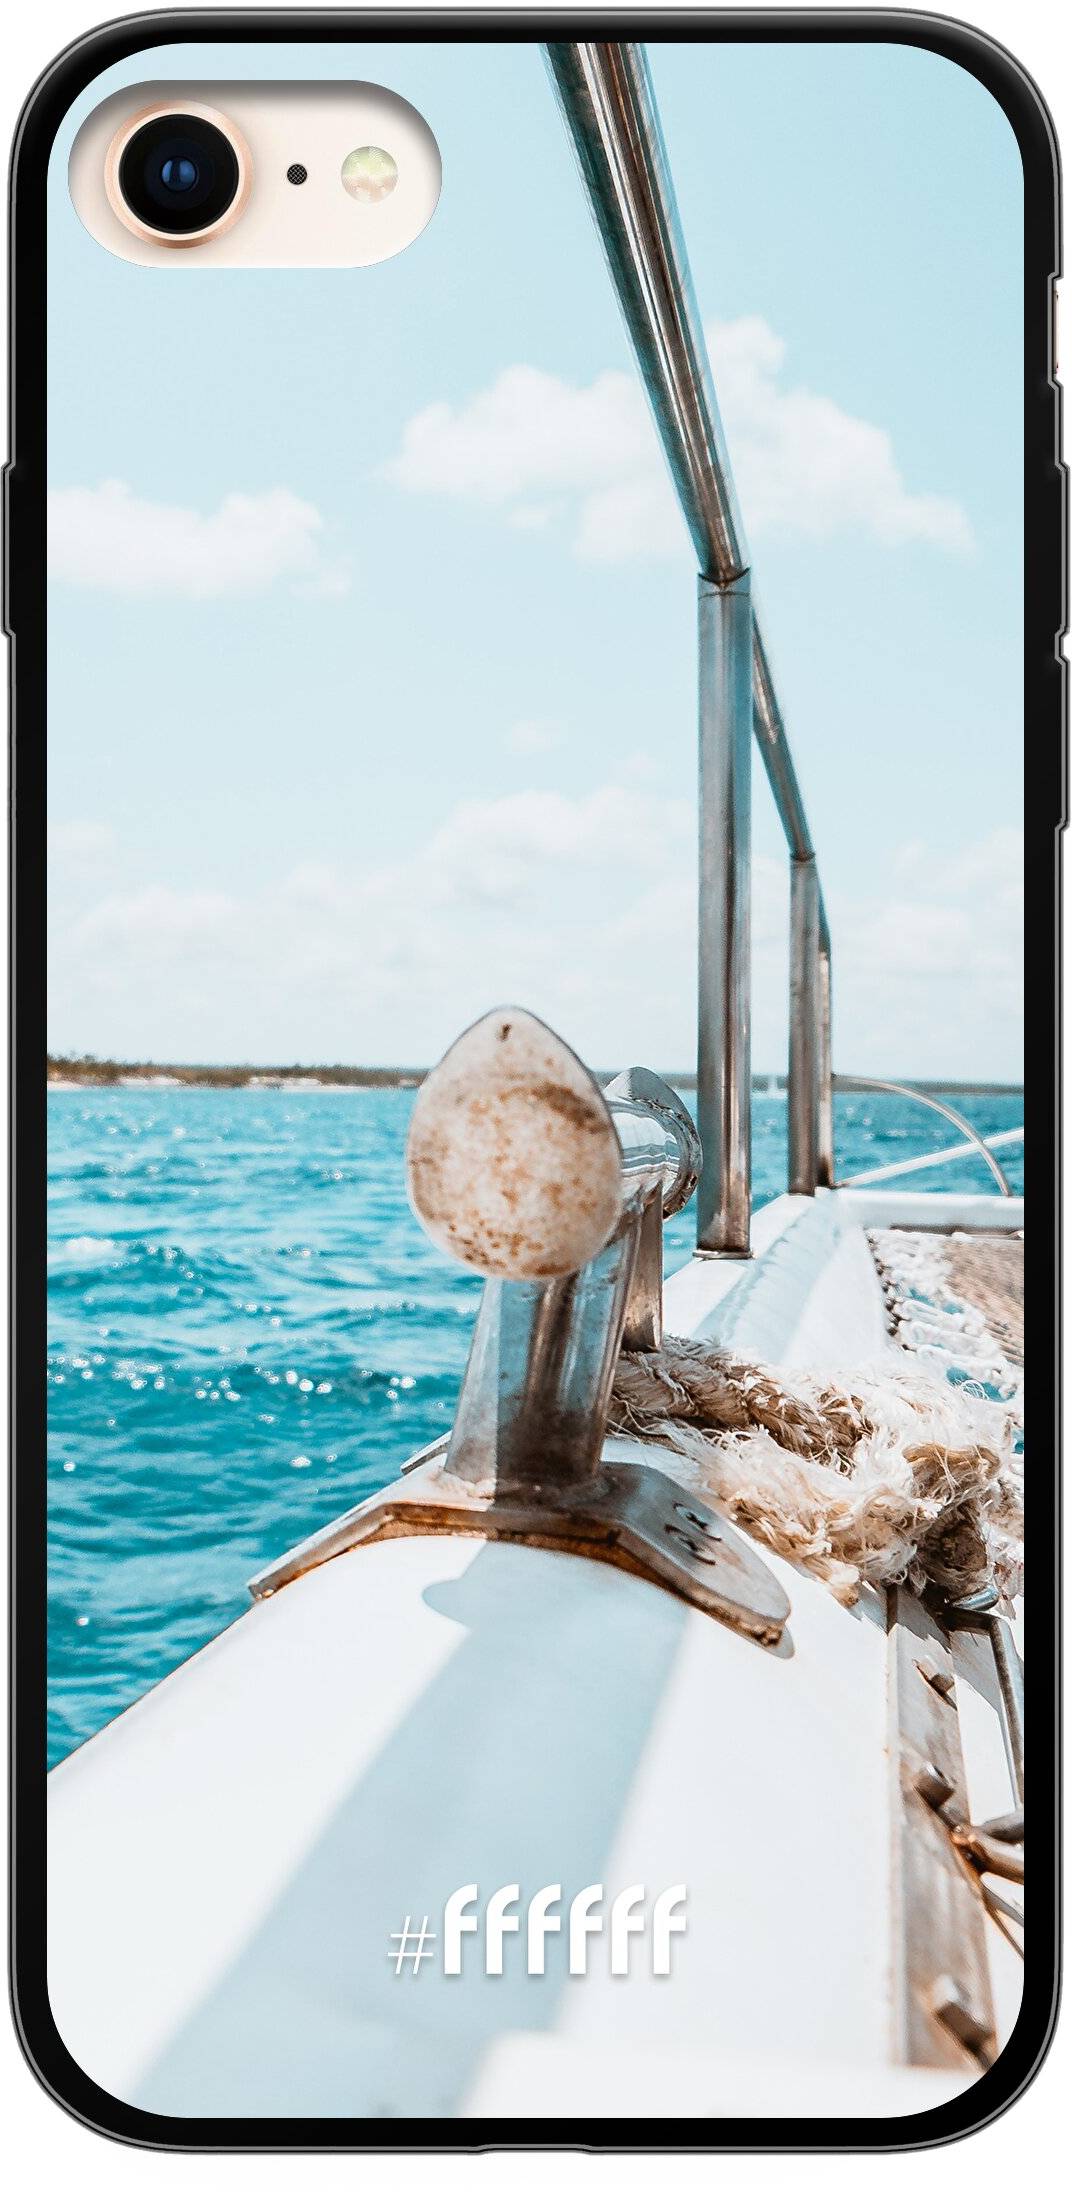 Sailing iPhone 7